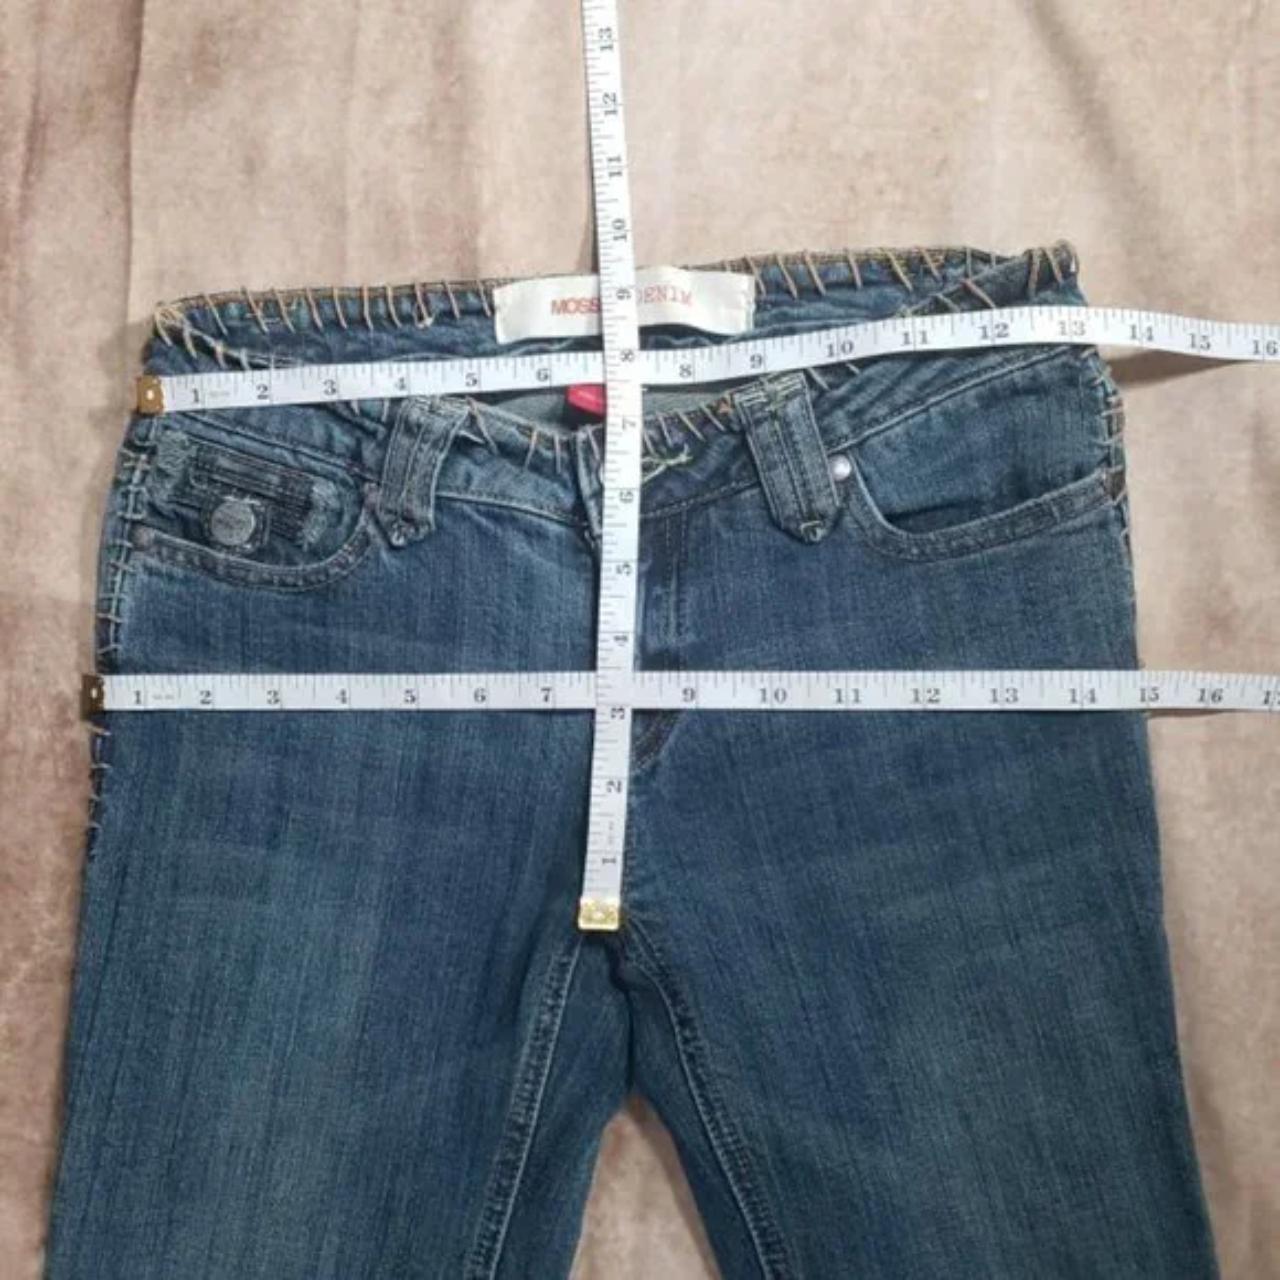 Mossimo Denim vintage bootcut jeans. This pair has... - Depop